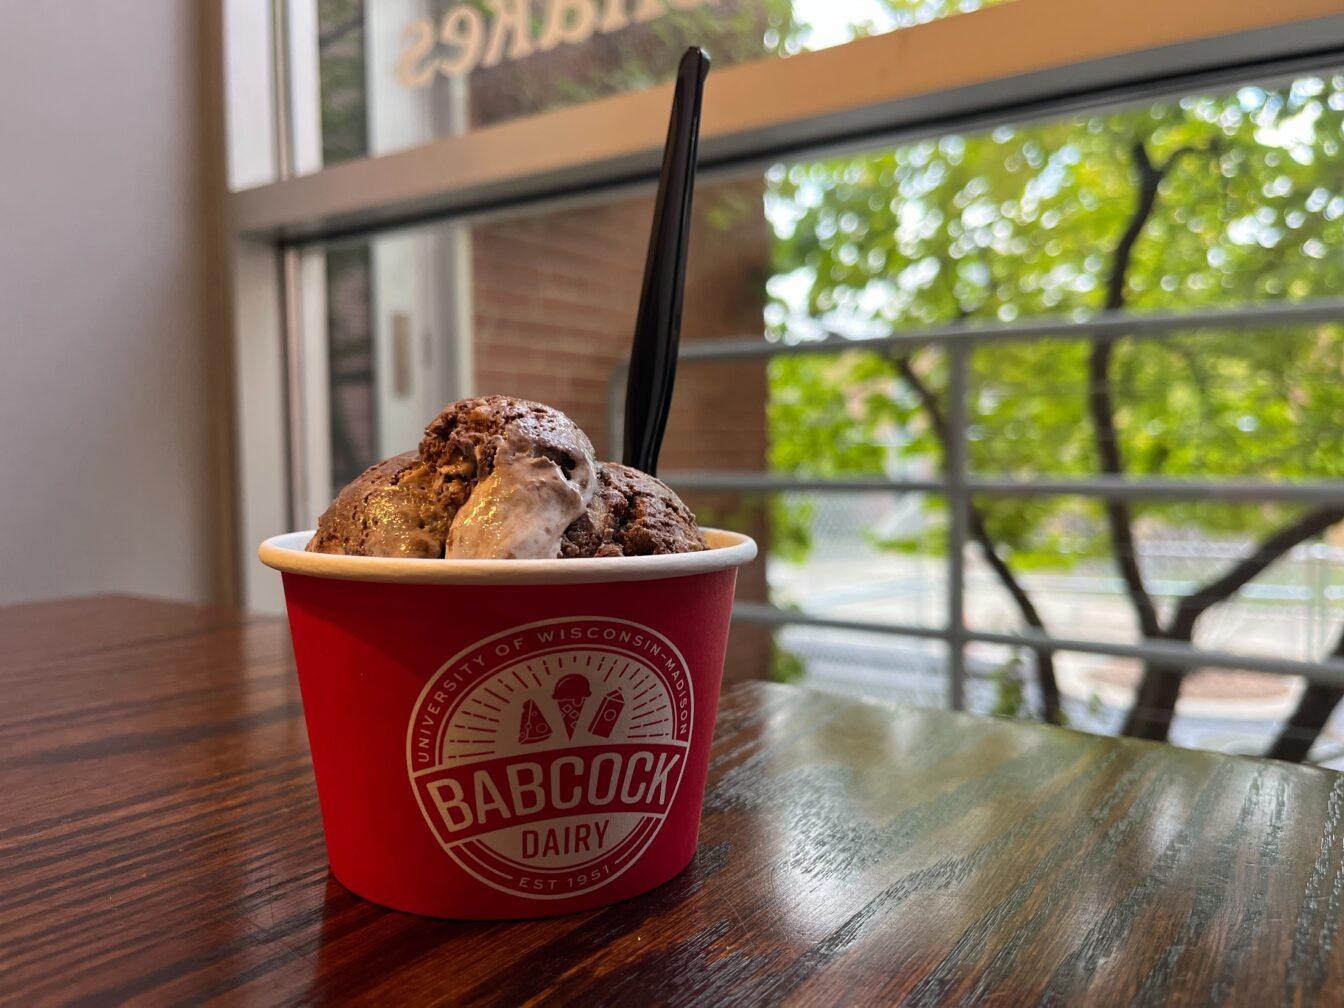 We’ll take s’more: Babcock’s new ice cream flavor commemorates UW’s 175th anniversary